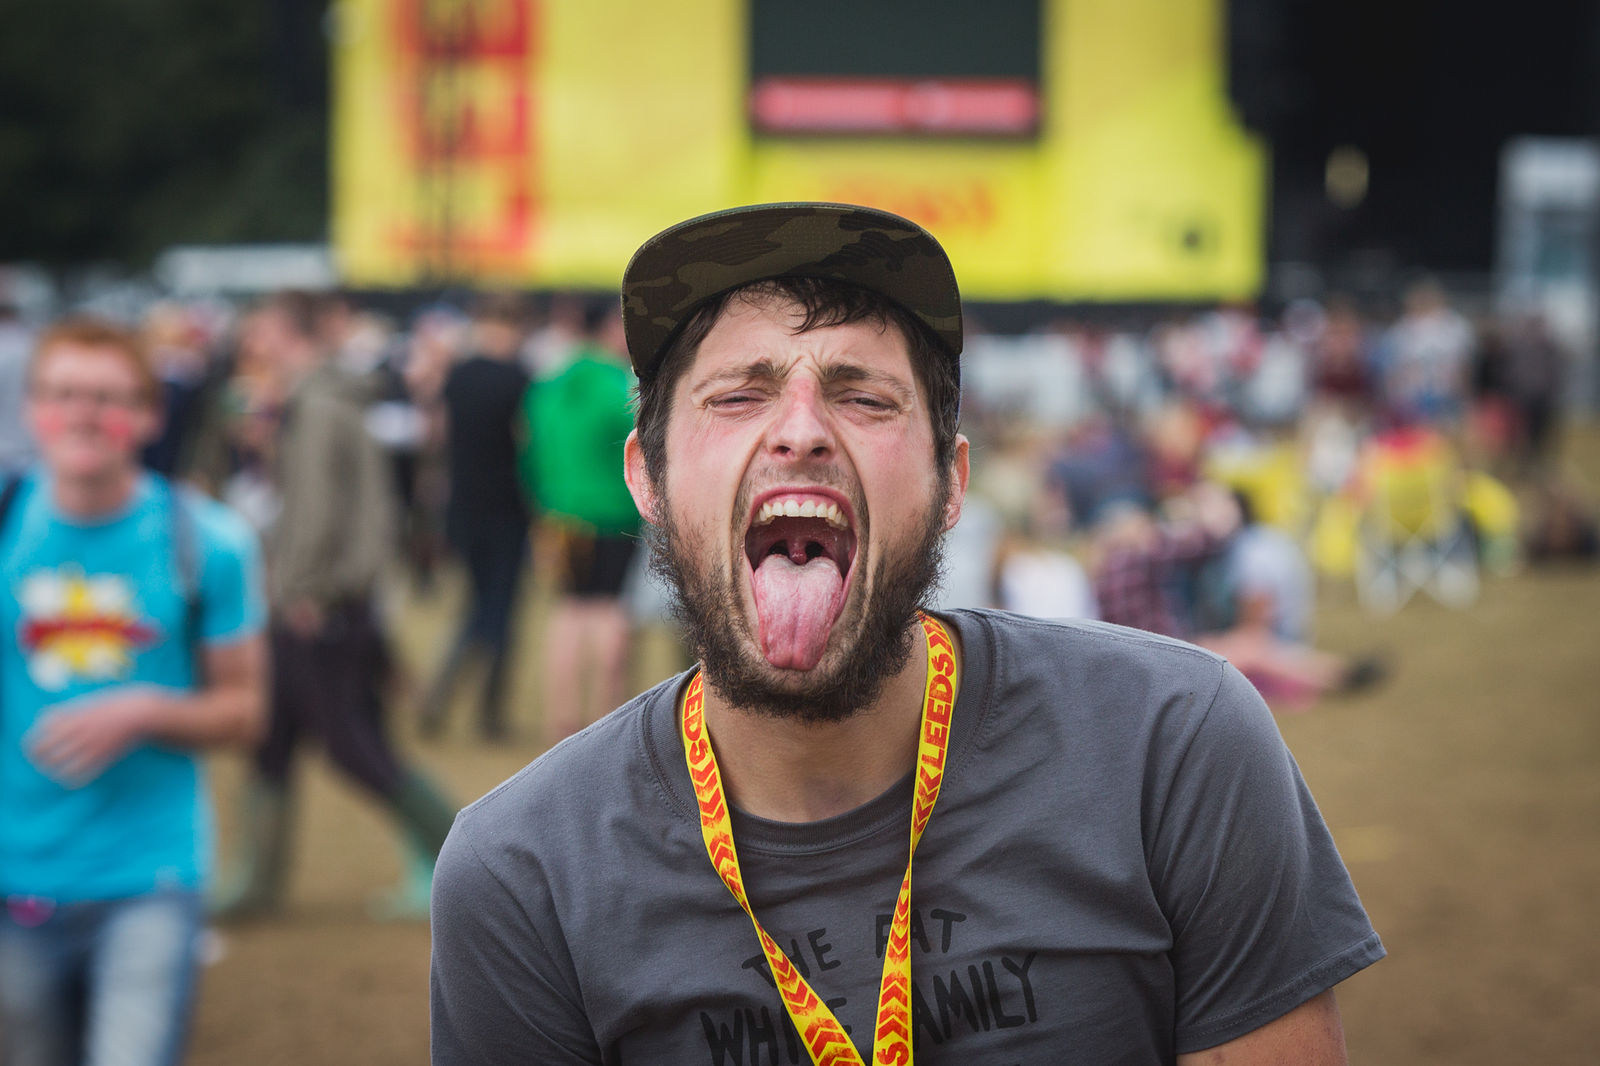 Leeds Festival 2014